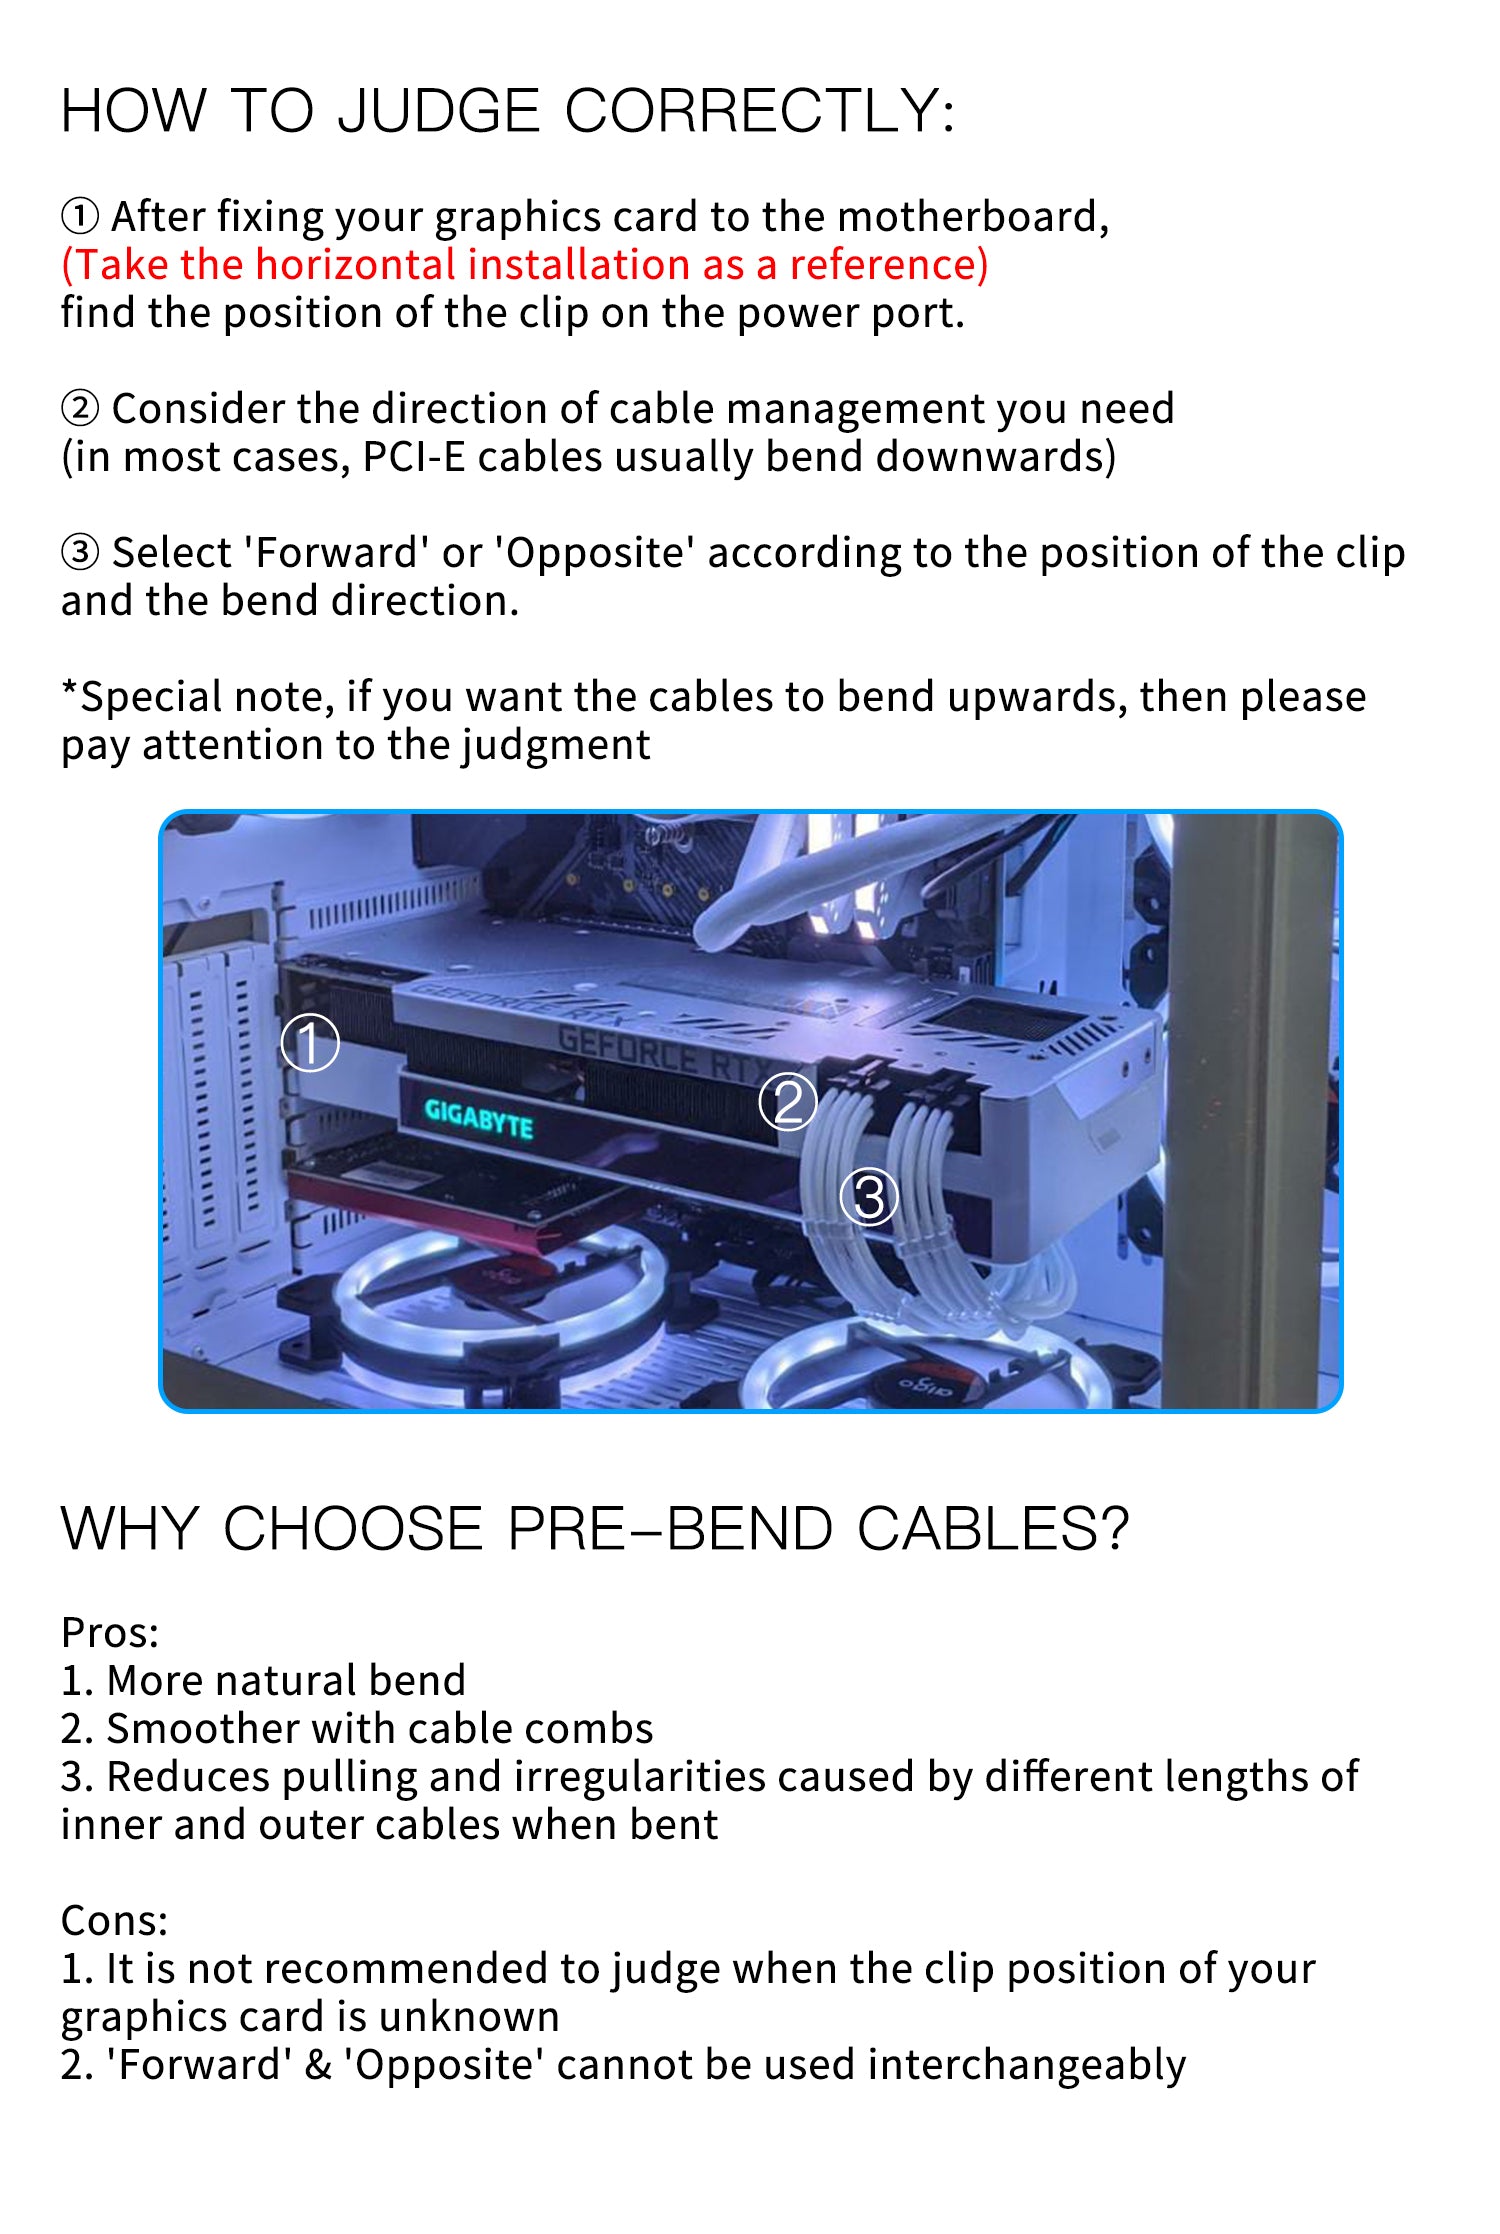 Advanced Wire Management Kit